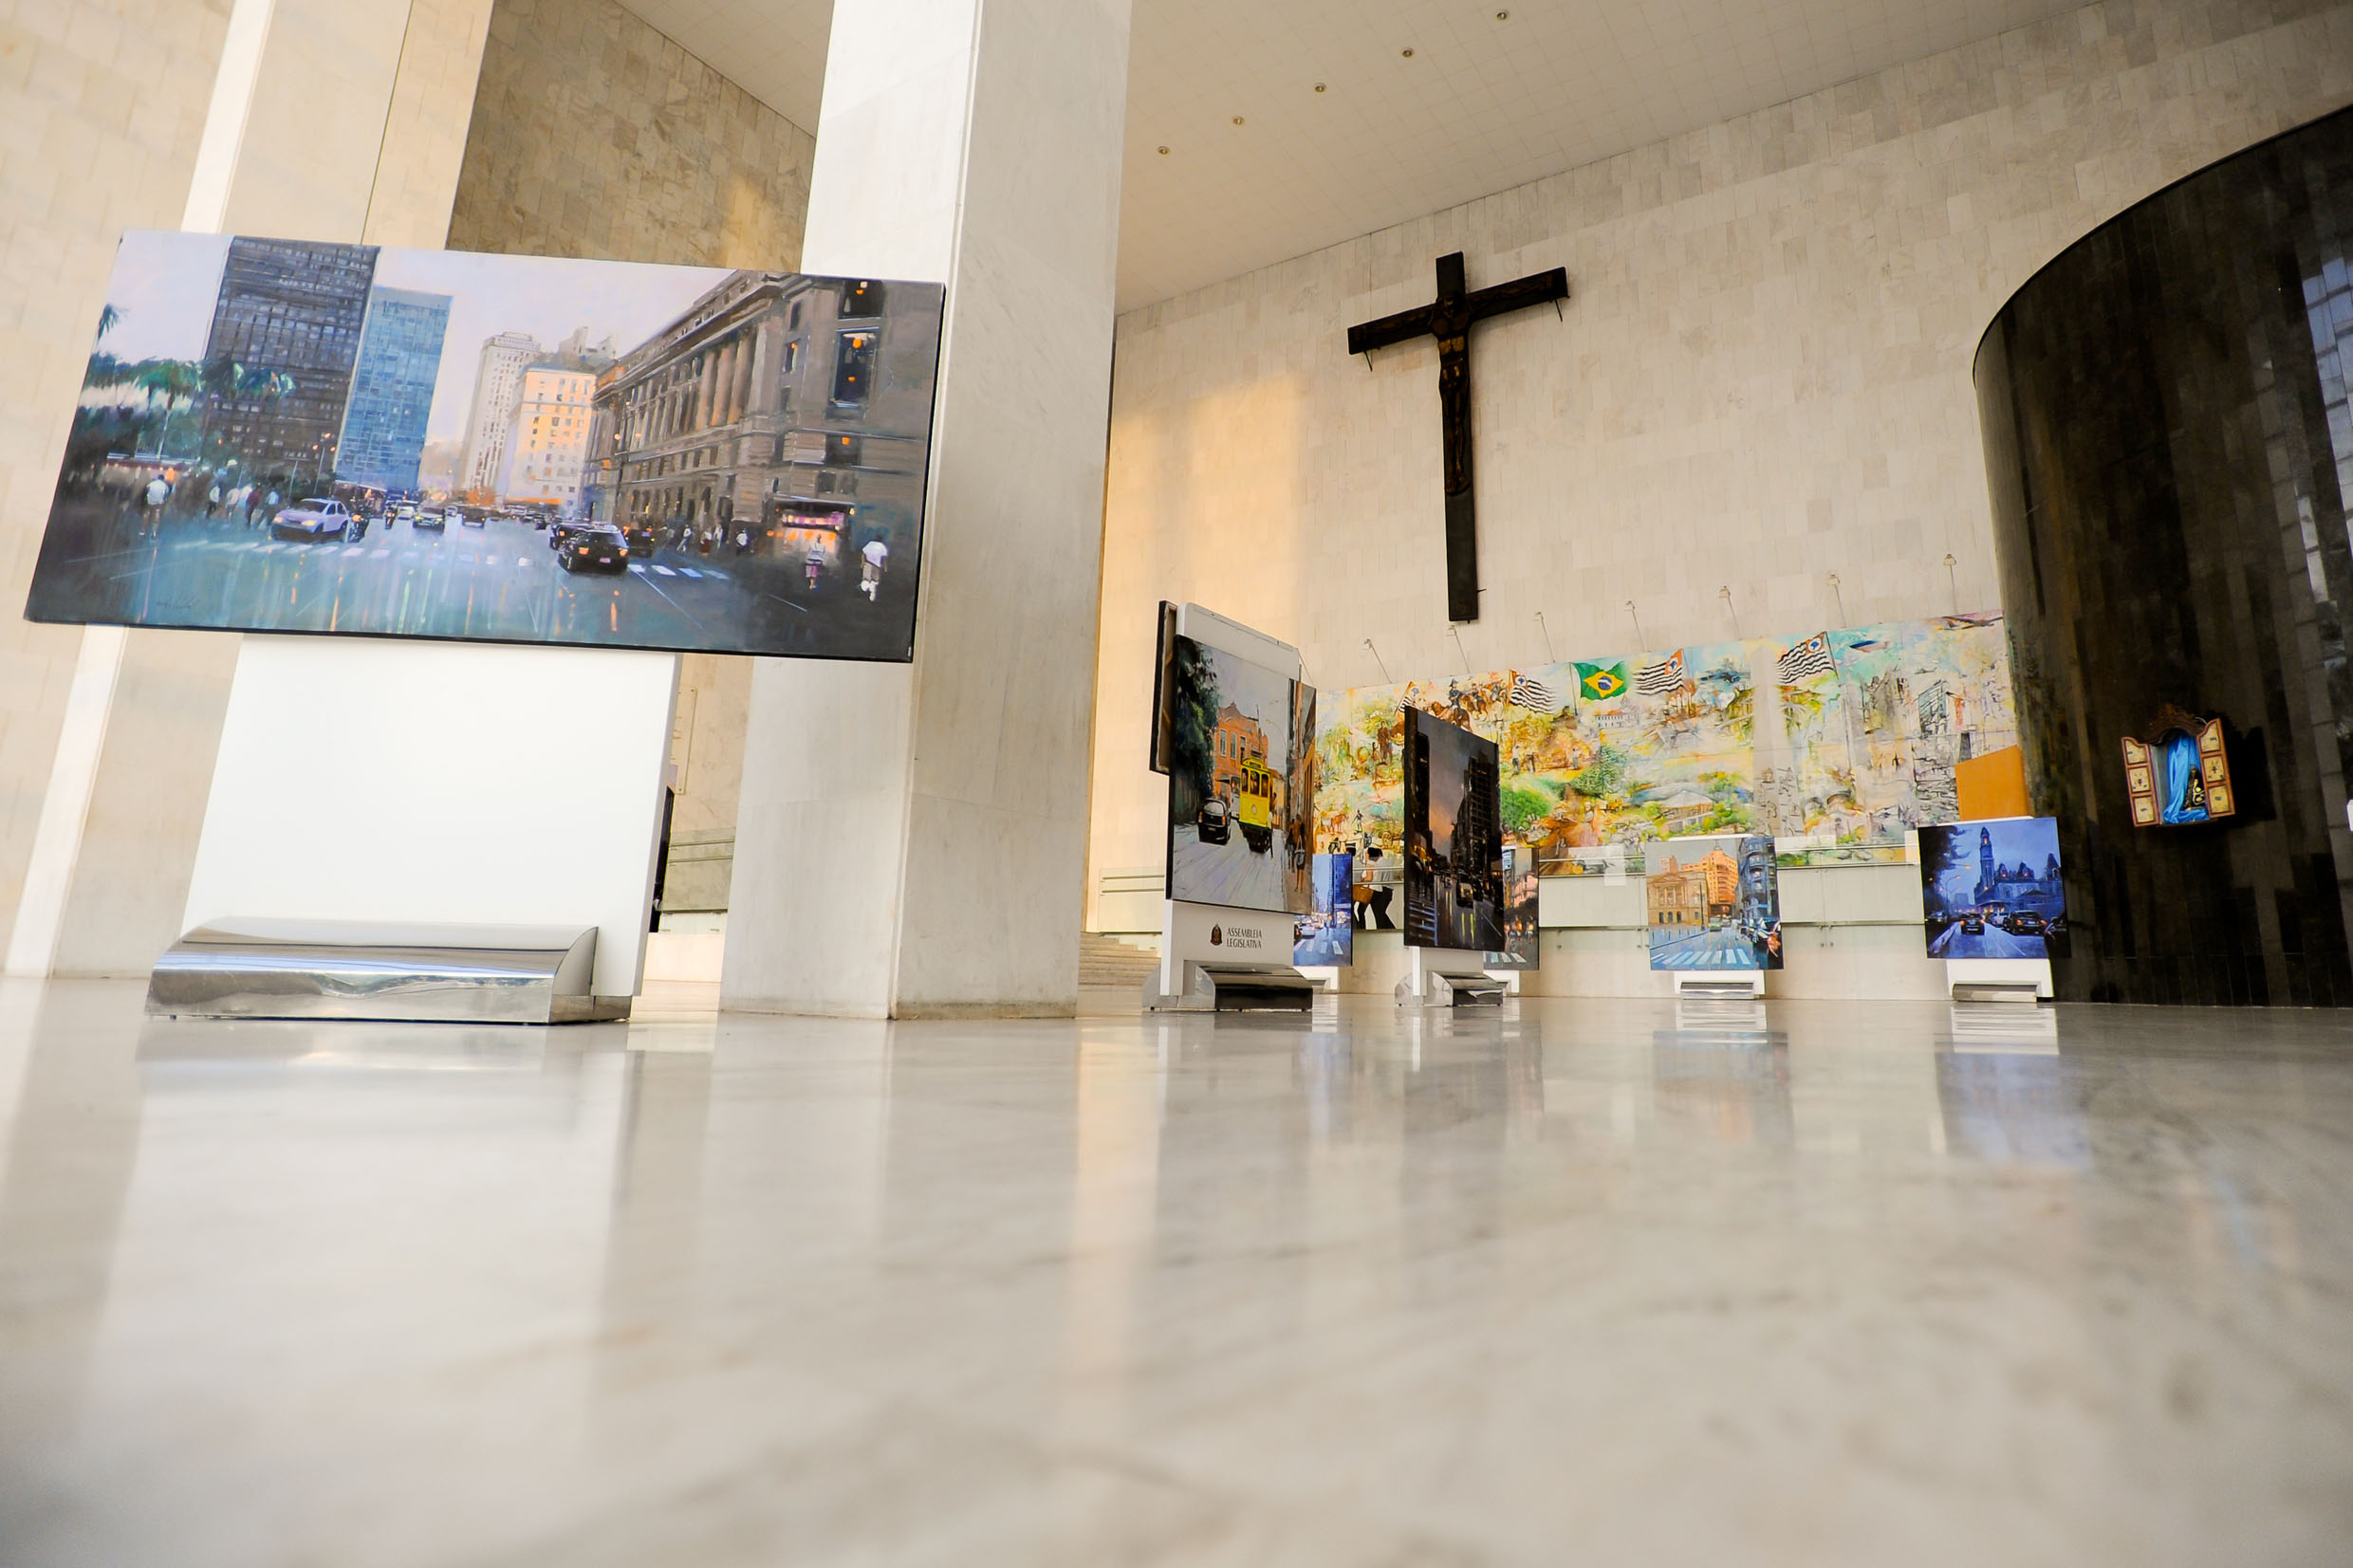 Exposio de Andr Lombardi foi inaugurada no Hall Monumental <a style='float:right;color:#ccc' href='https://www3.al.sp.gov.br/repositorio/noticia/N-03-2017/fg200433.jpg' target=_blank><i class='bi bi-zoom-in'></i> Clique para ver a imagem </a>